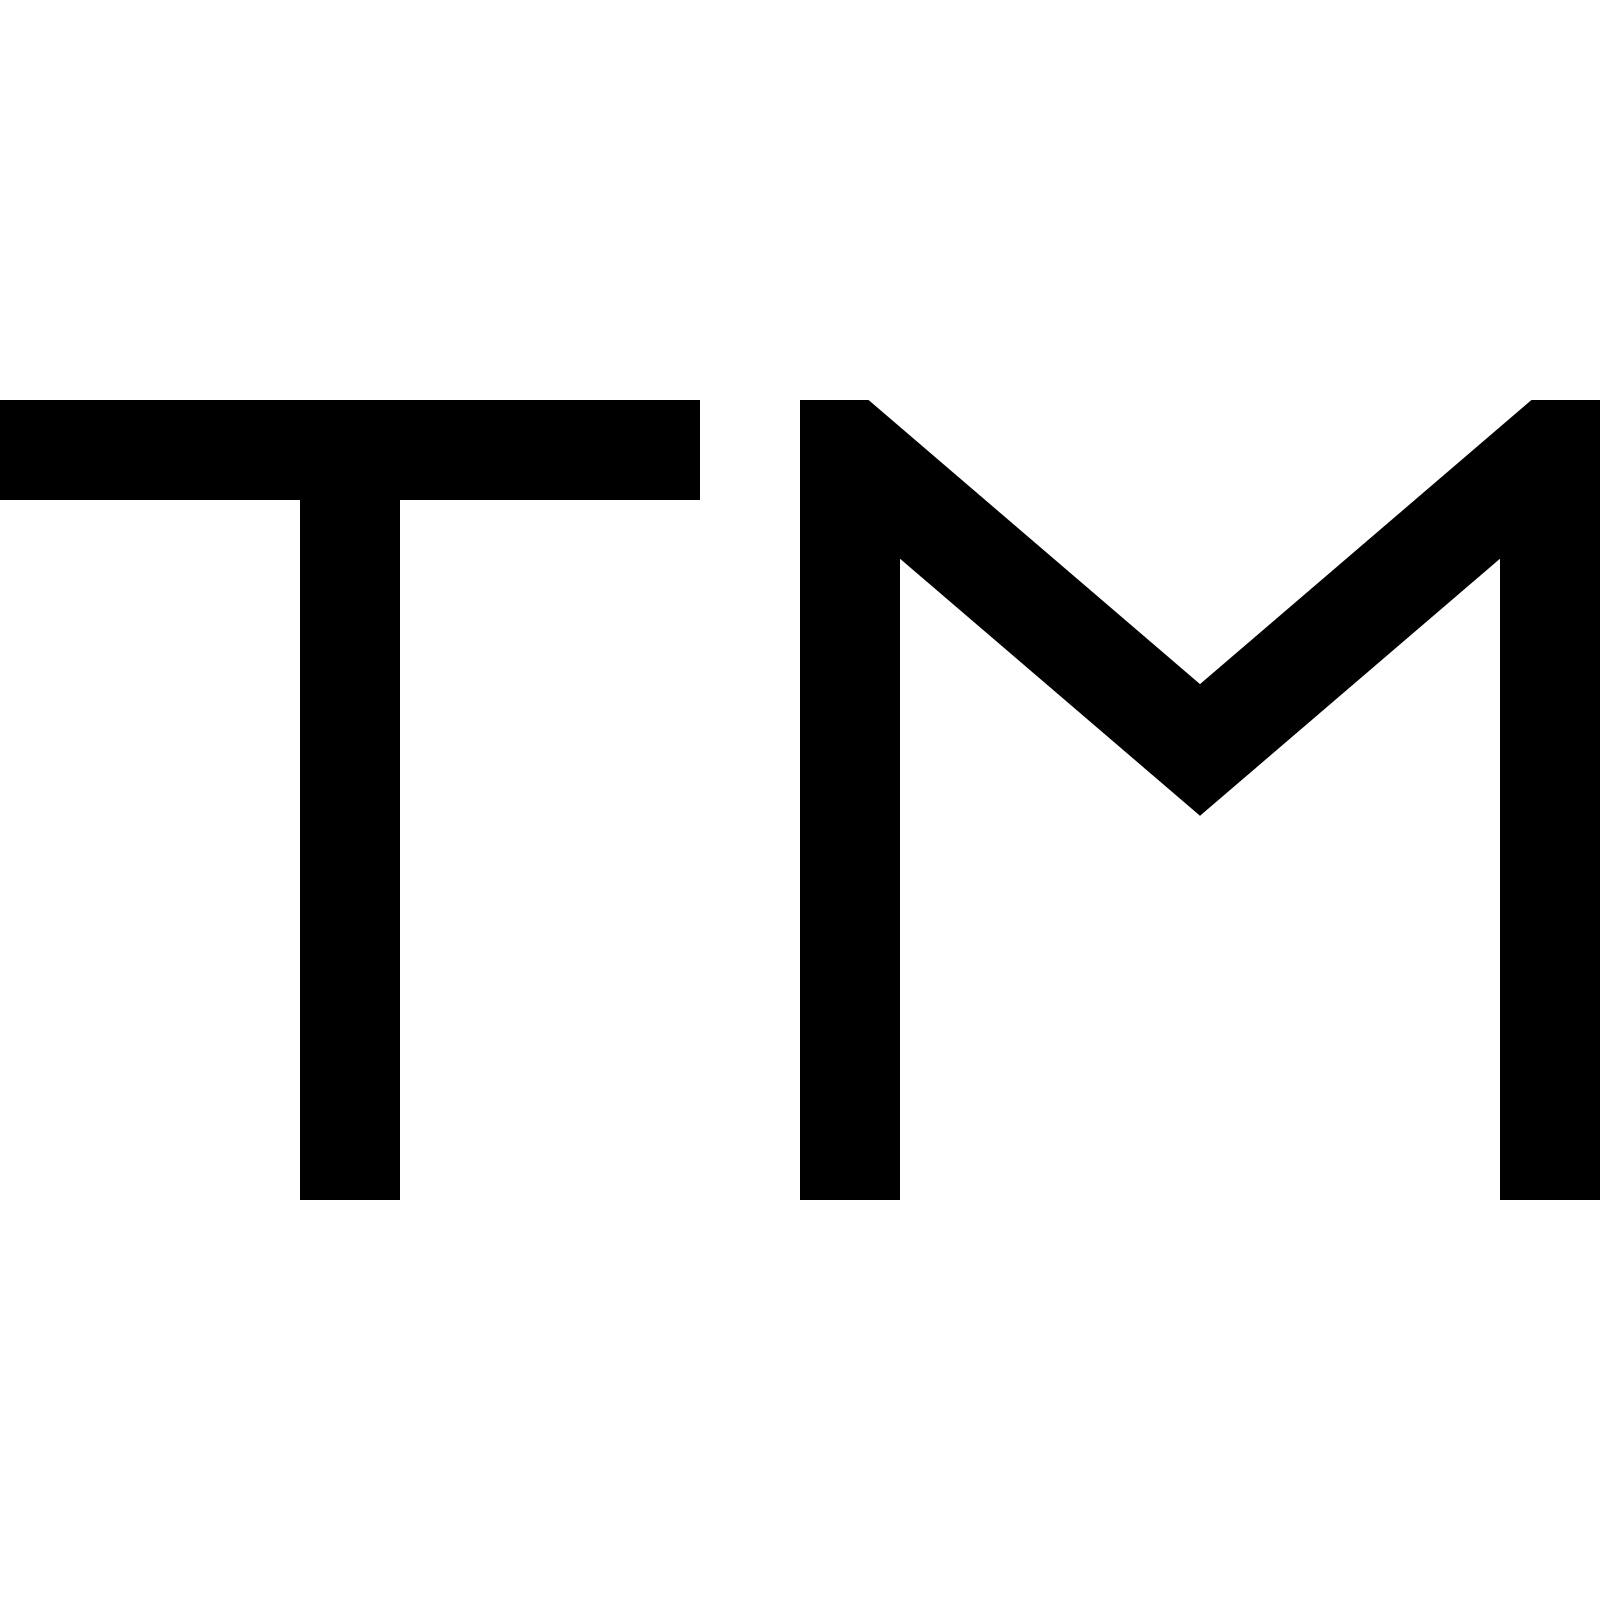 Trademark TM Logo PNG Clipart Background